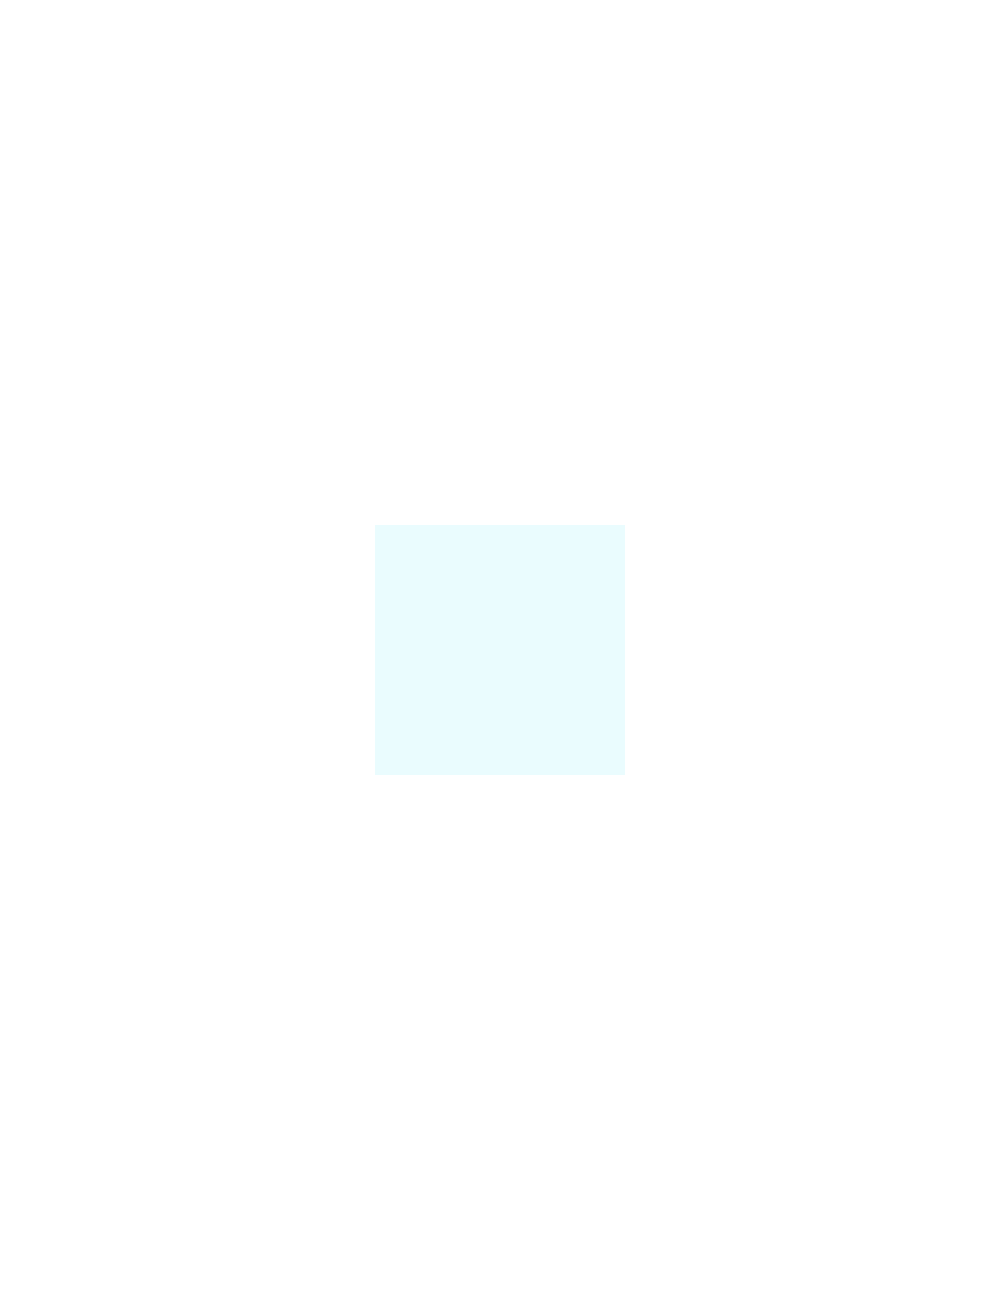 LEE FILTERS - Rouleau de gelatine spectacle 0. 53 x1. 22m RL203.